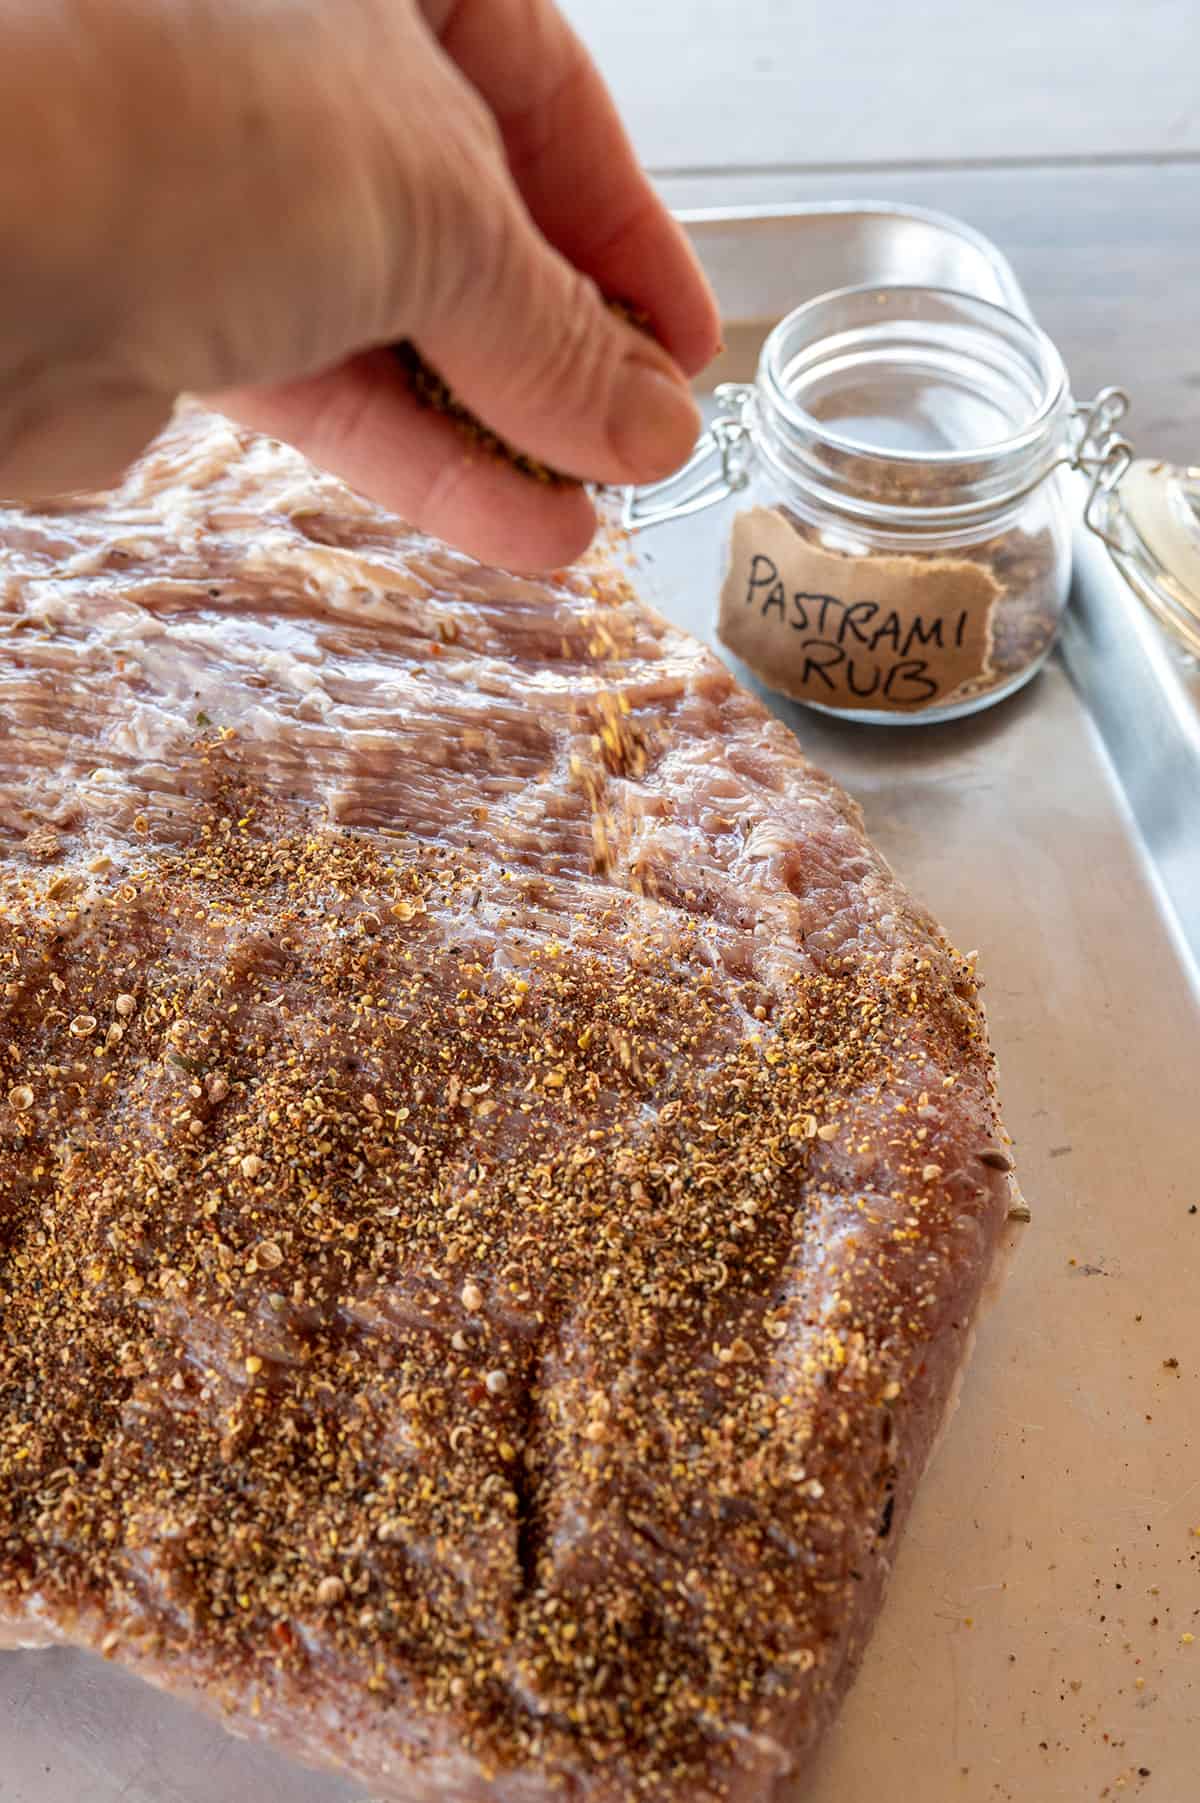 sprinkling pastrami rub on corned beef brisket.